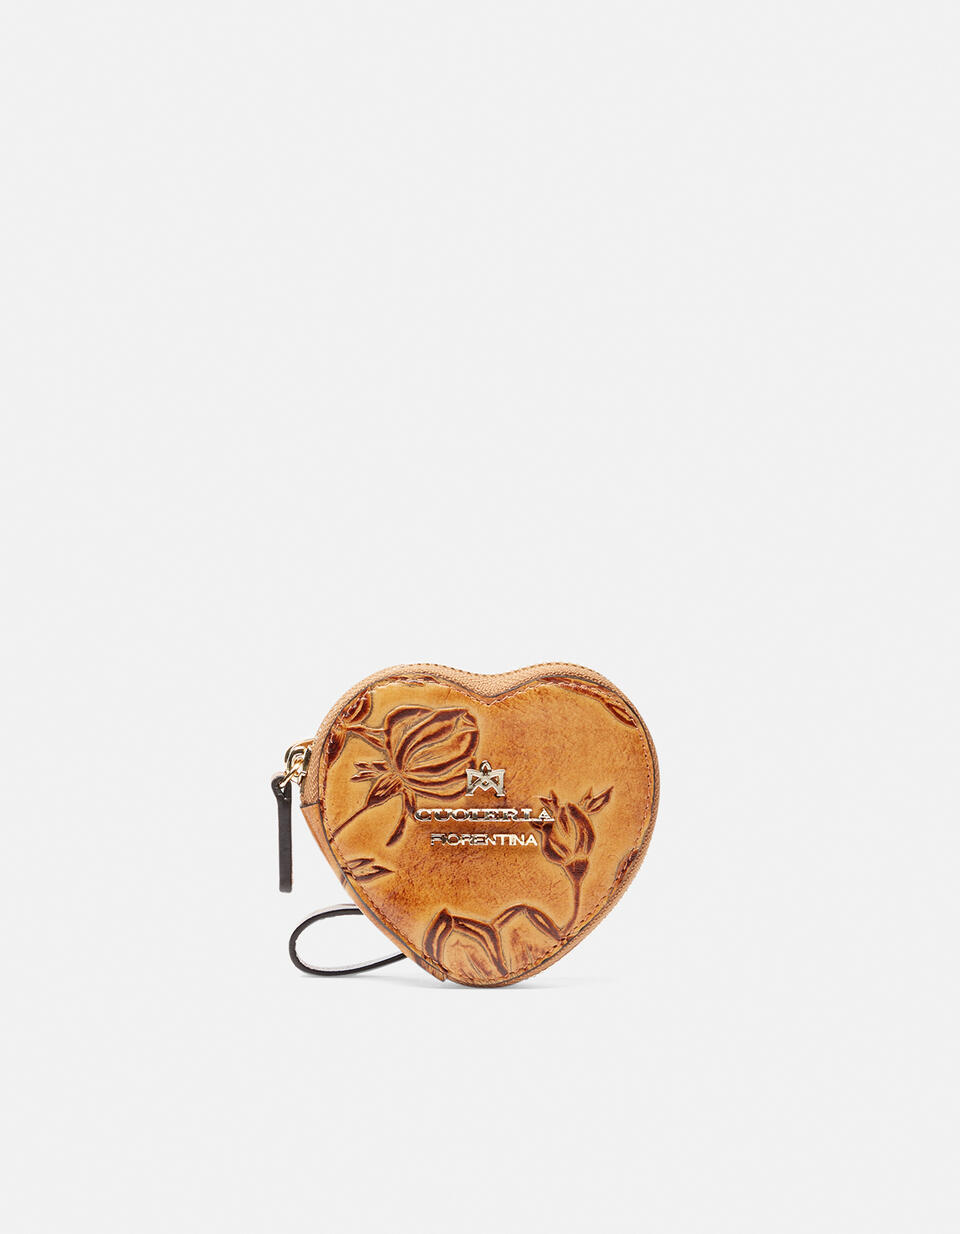 Heart purse - Women's Accessories | Accessories Mimì BEIGE - Women's Accessories | AccessoriesCuoieria Fiorentina